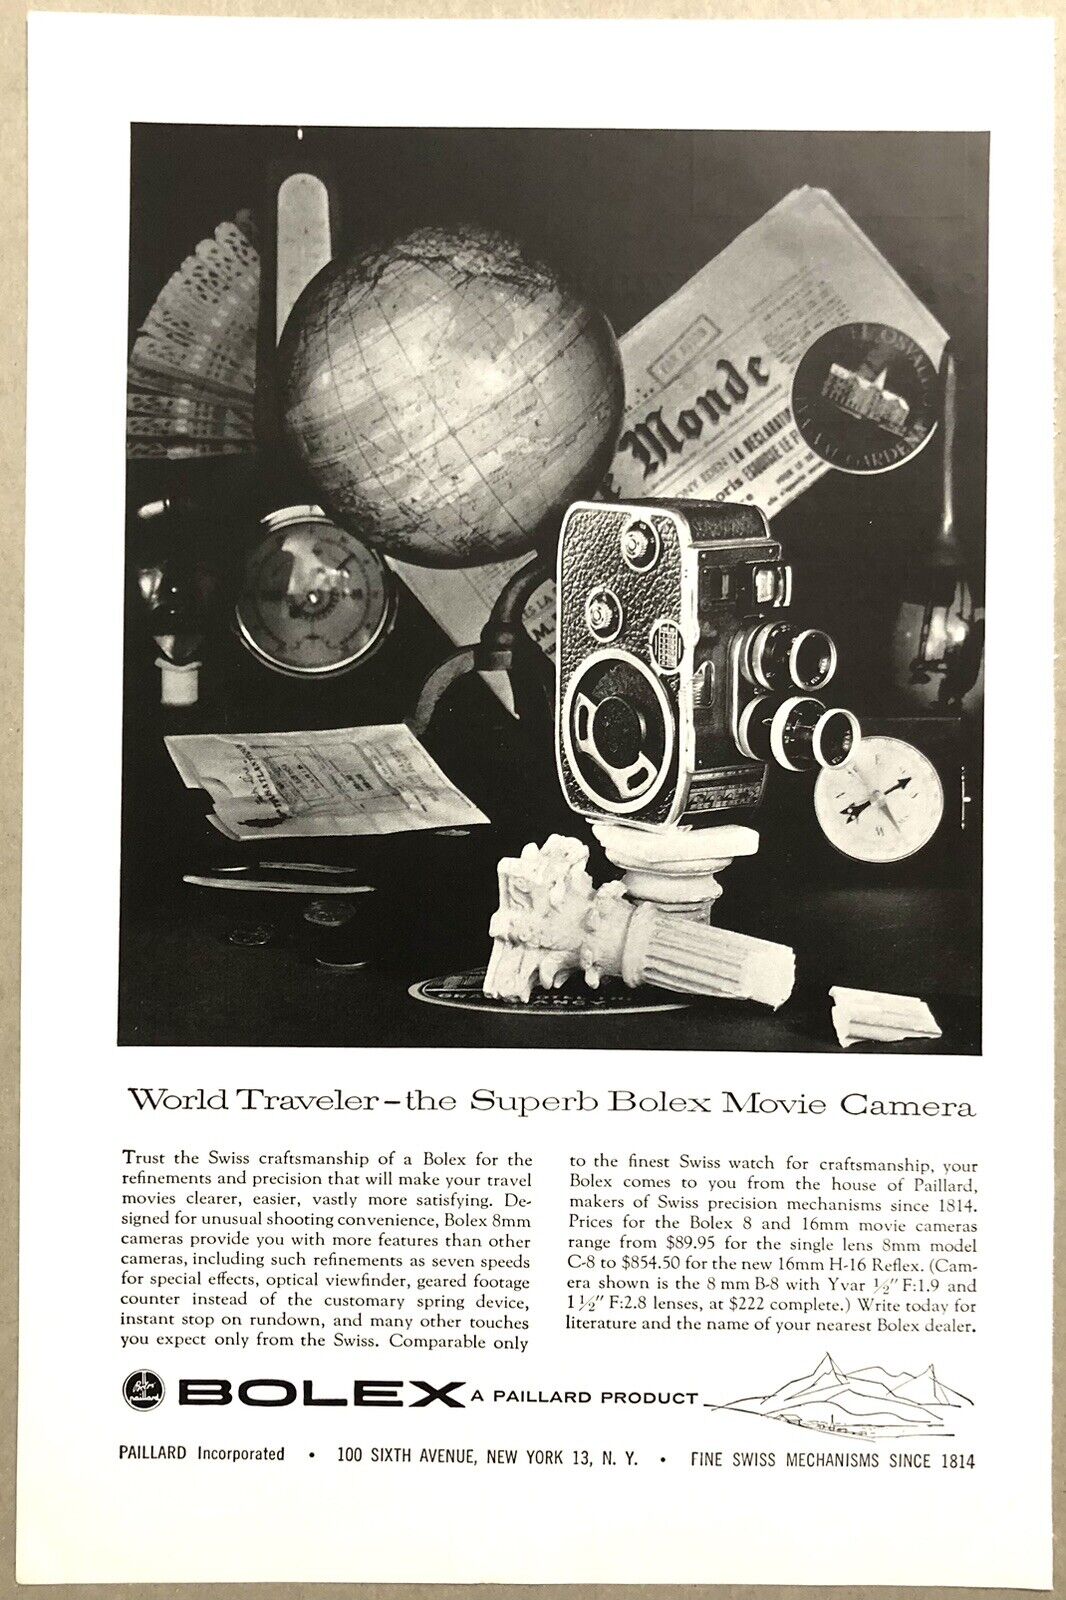 Vintage 1957 Original Print Advertisement Full Page - Bolex World Traveler